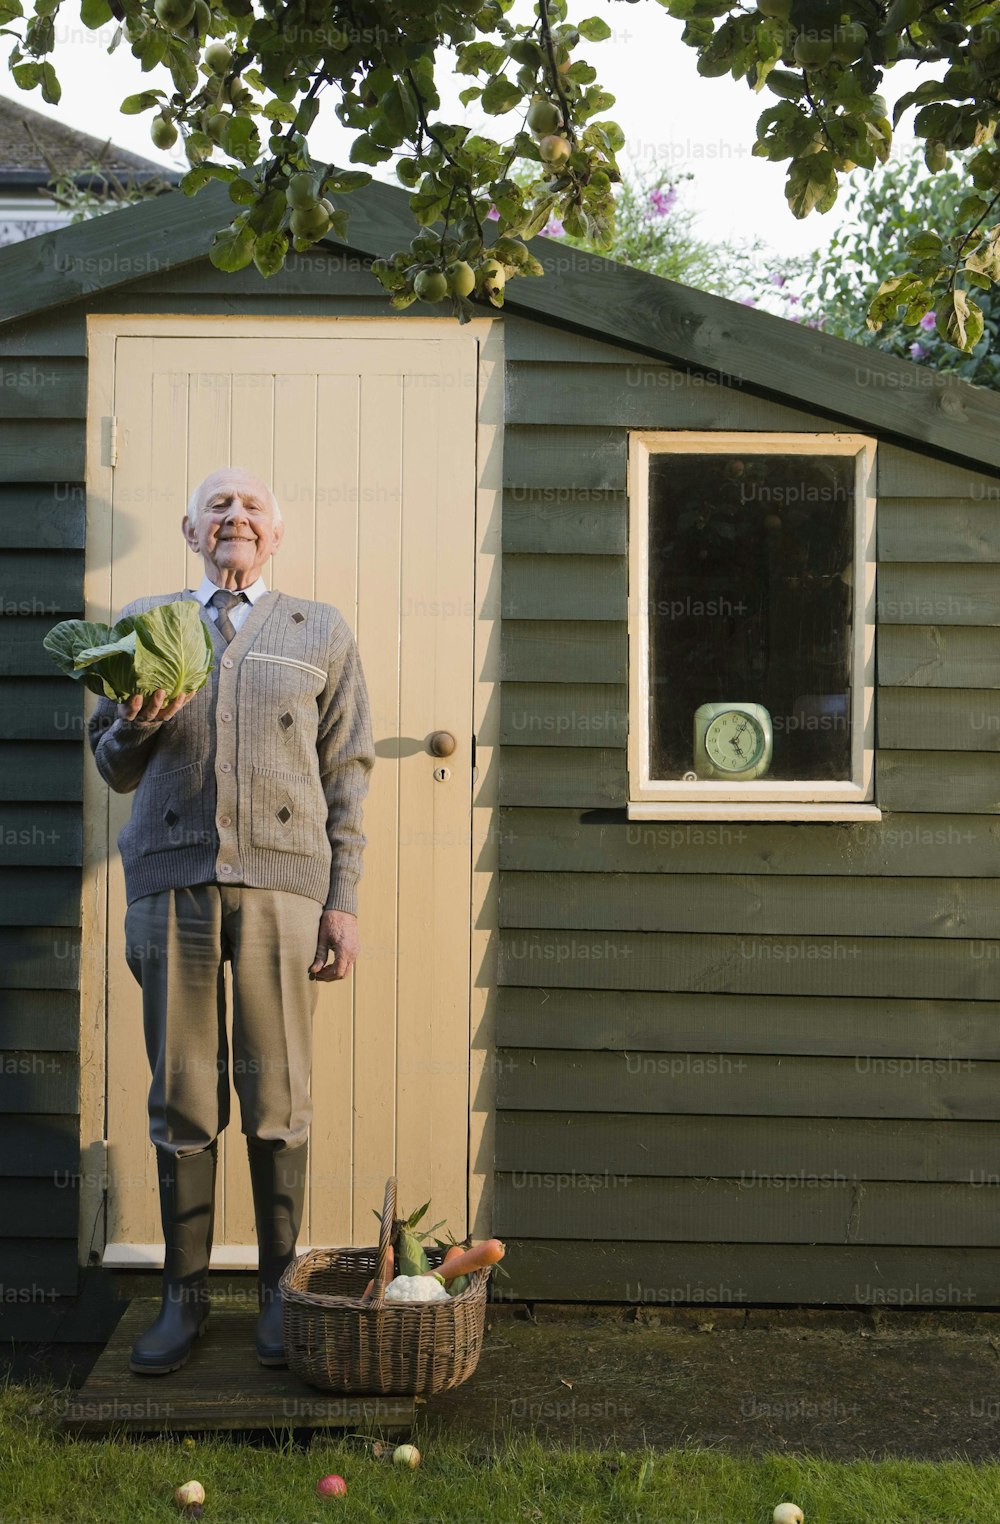 Un hombre parado frente a un cobertizo sosteniendo verduras